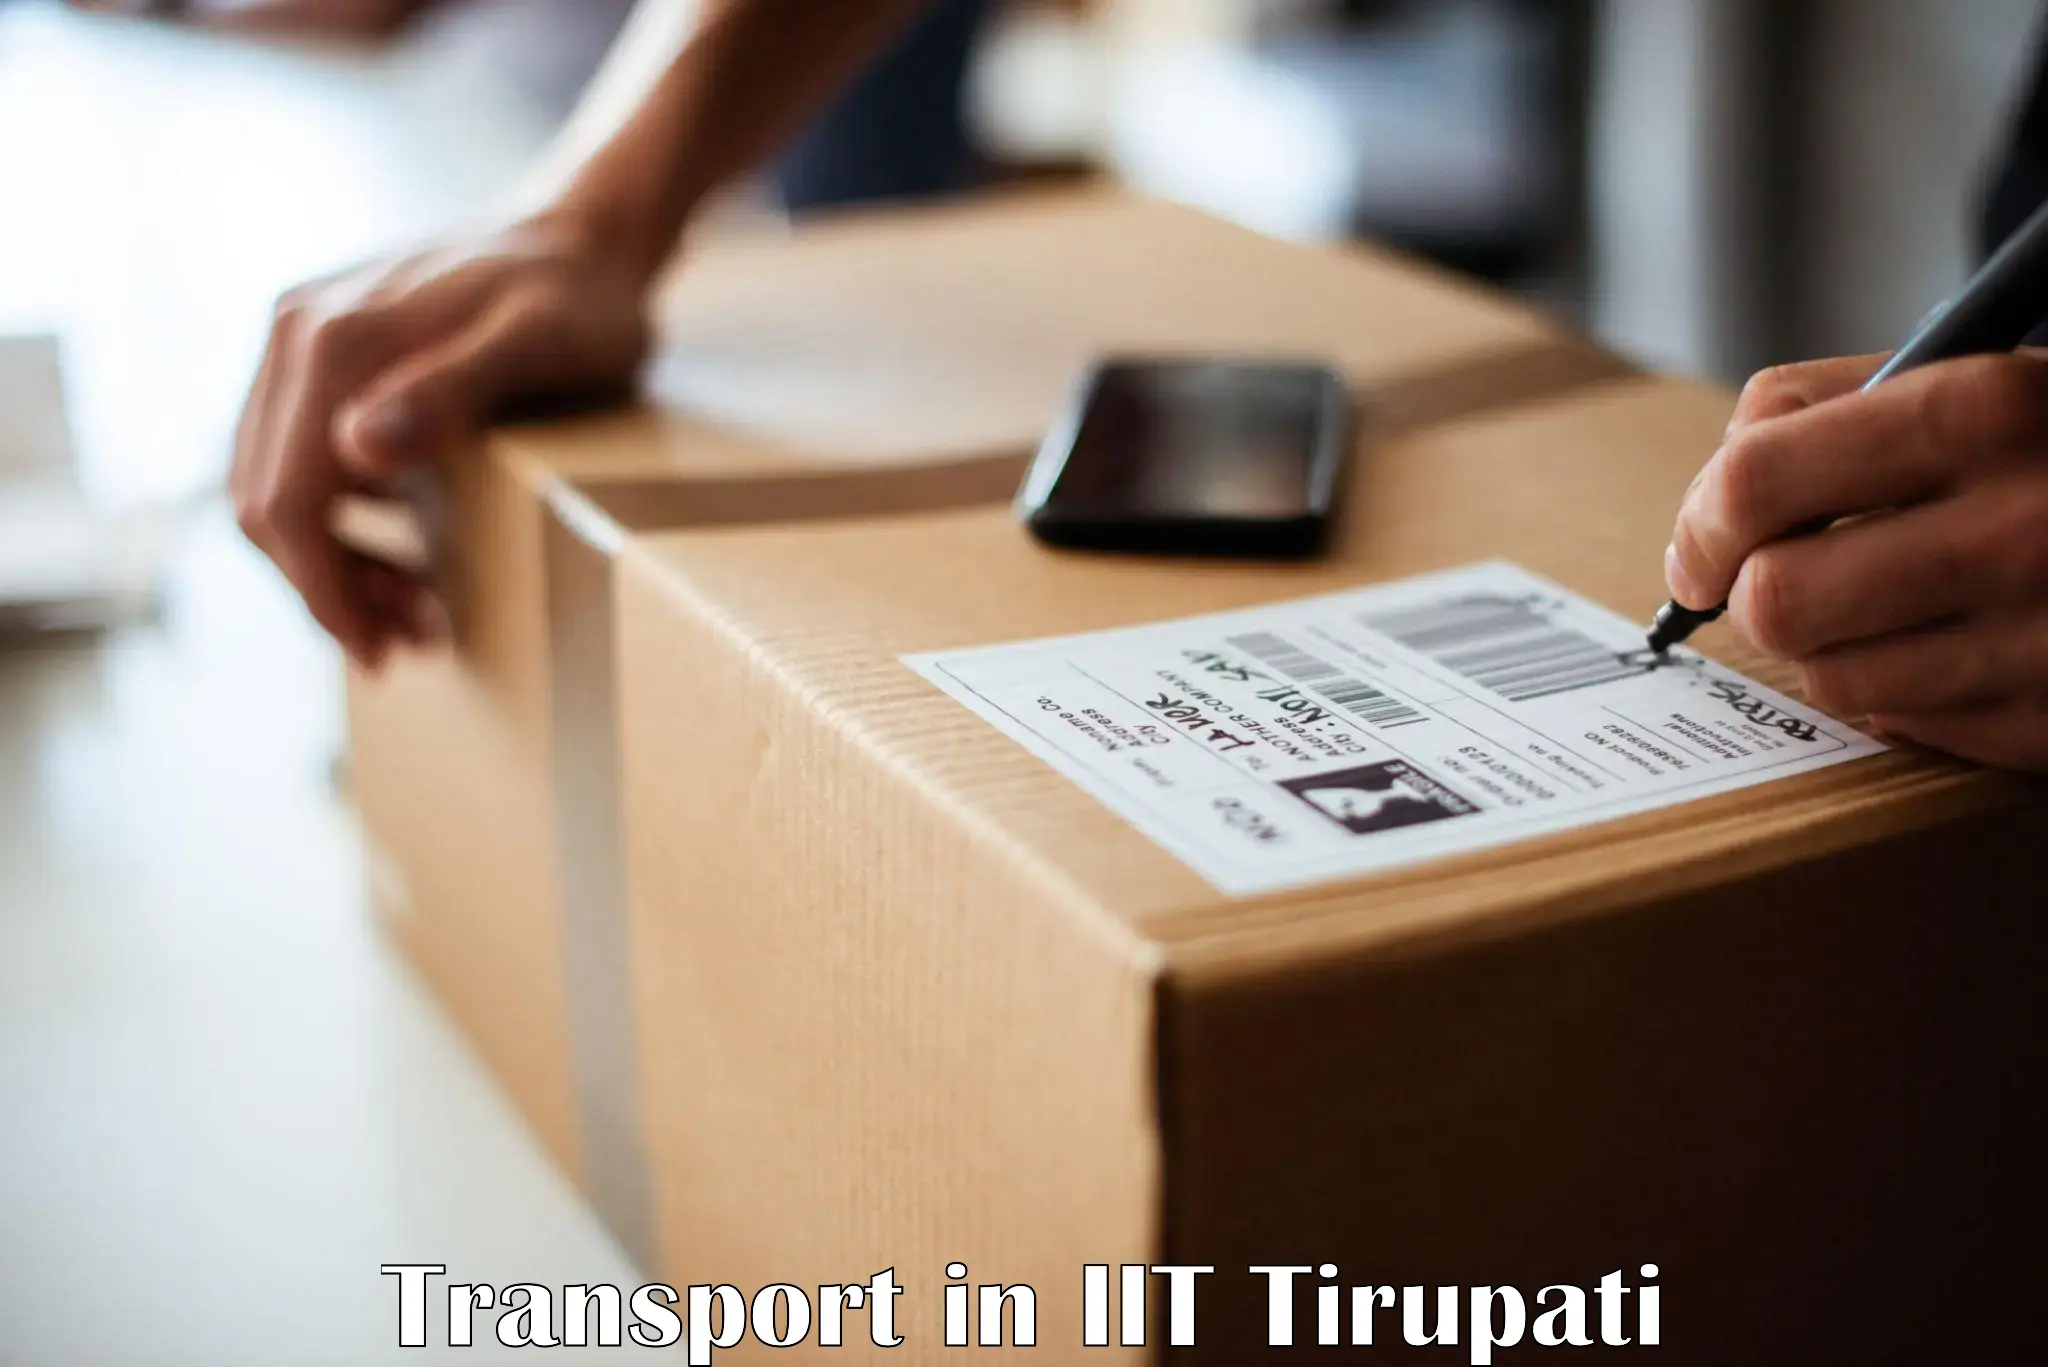 Part load transport service in India in IIT Tirupati